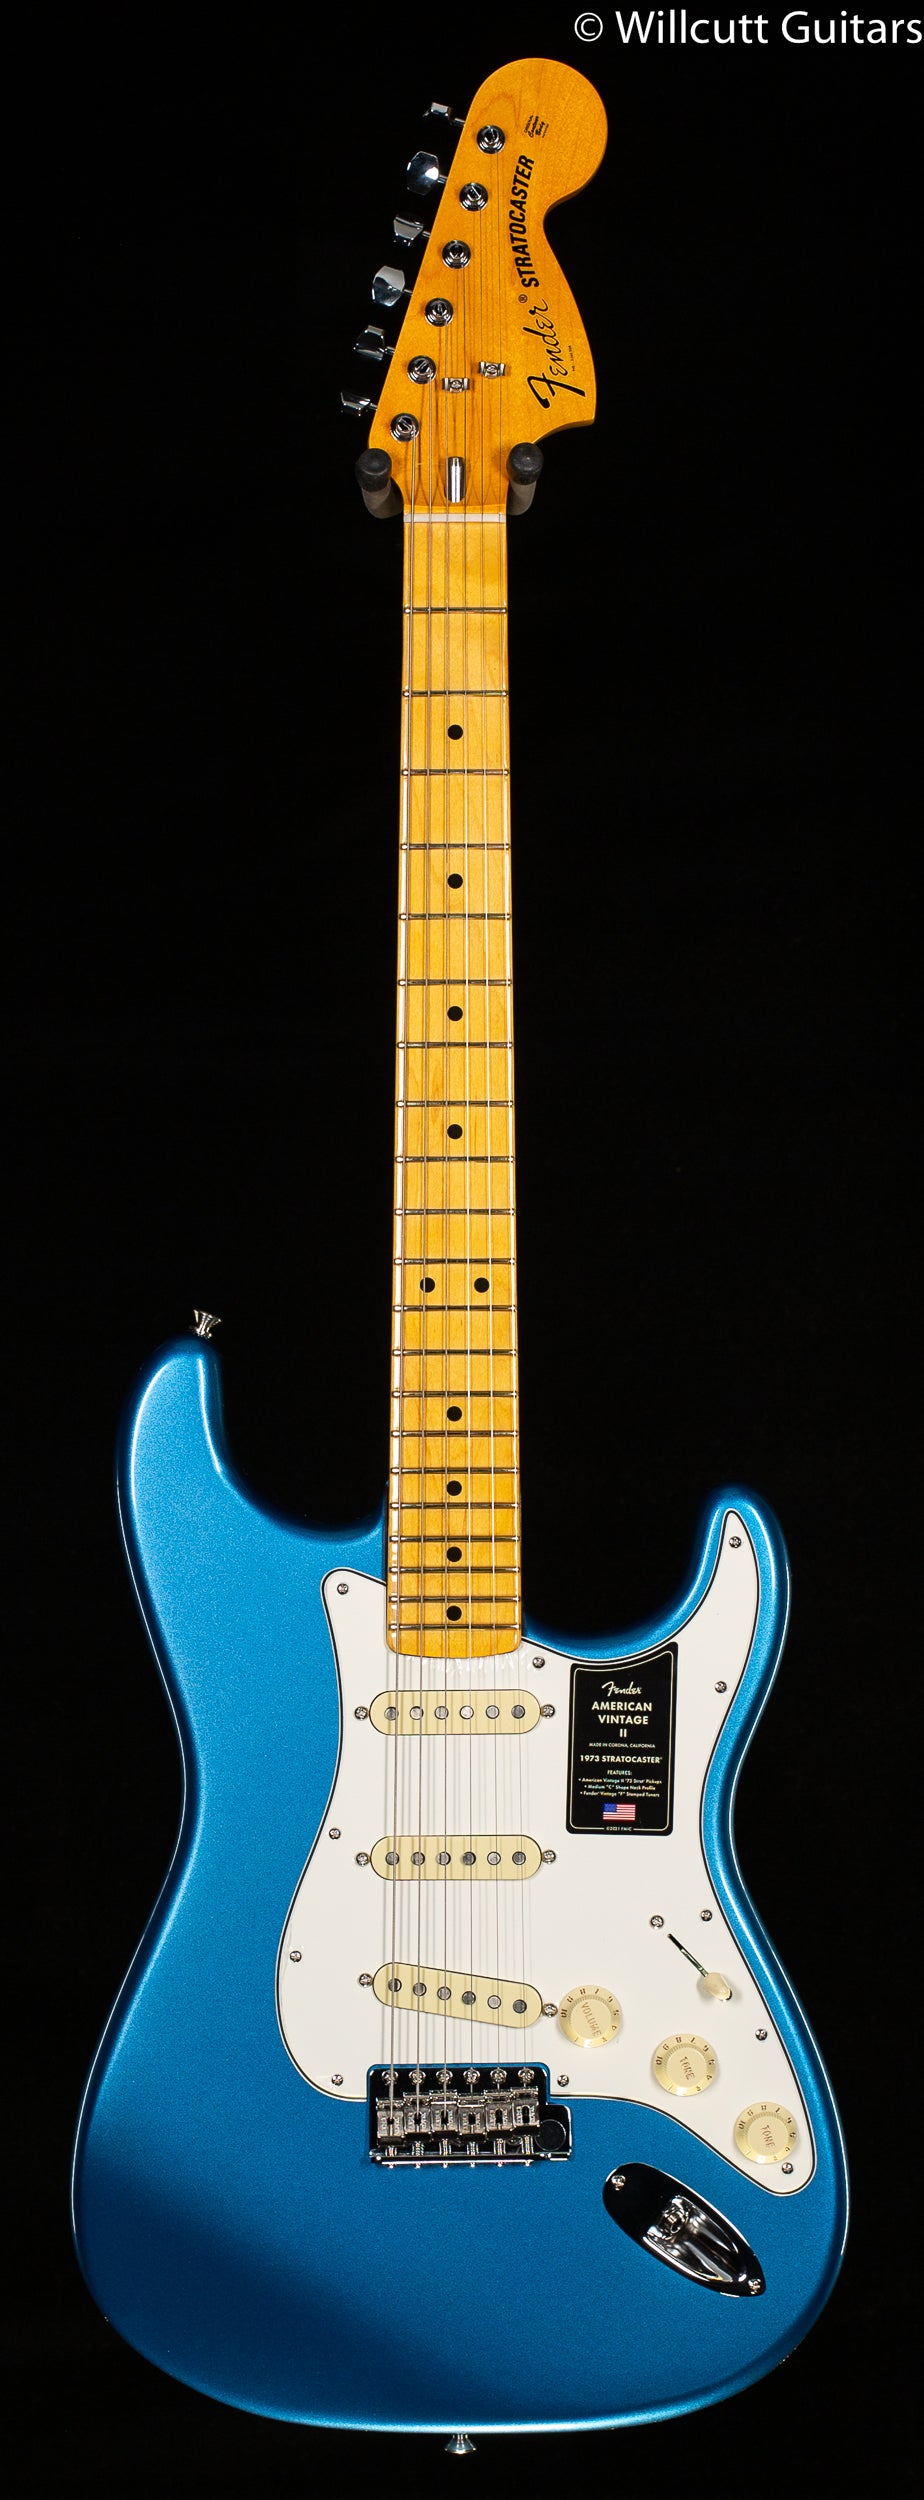 Fender American Vintage II 1973 Stratocaster Maple Fingerboard